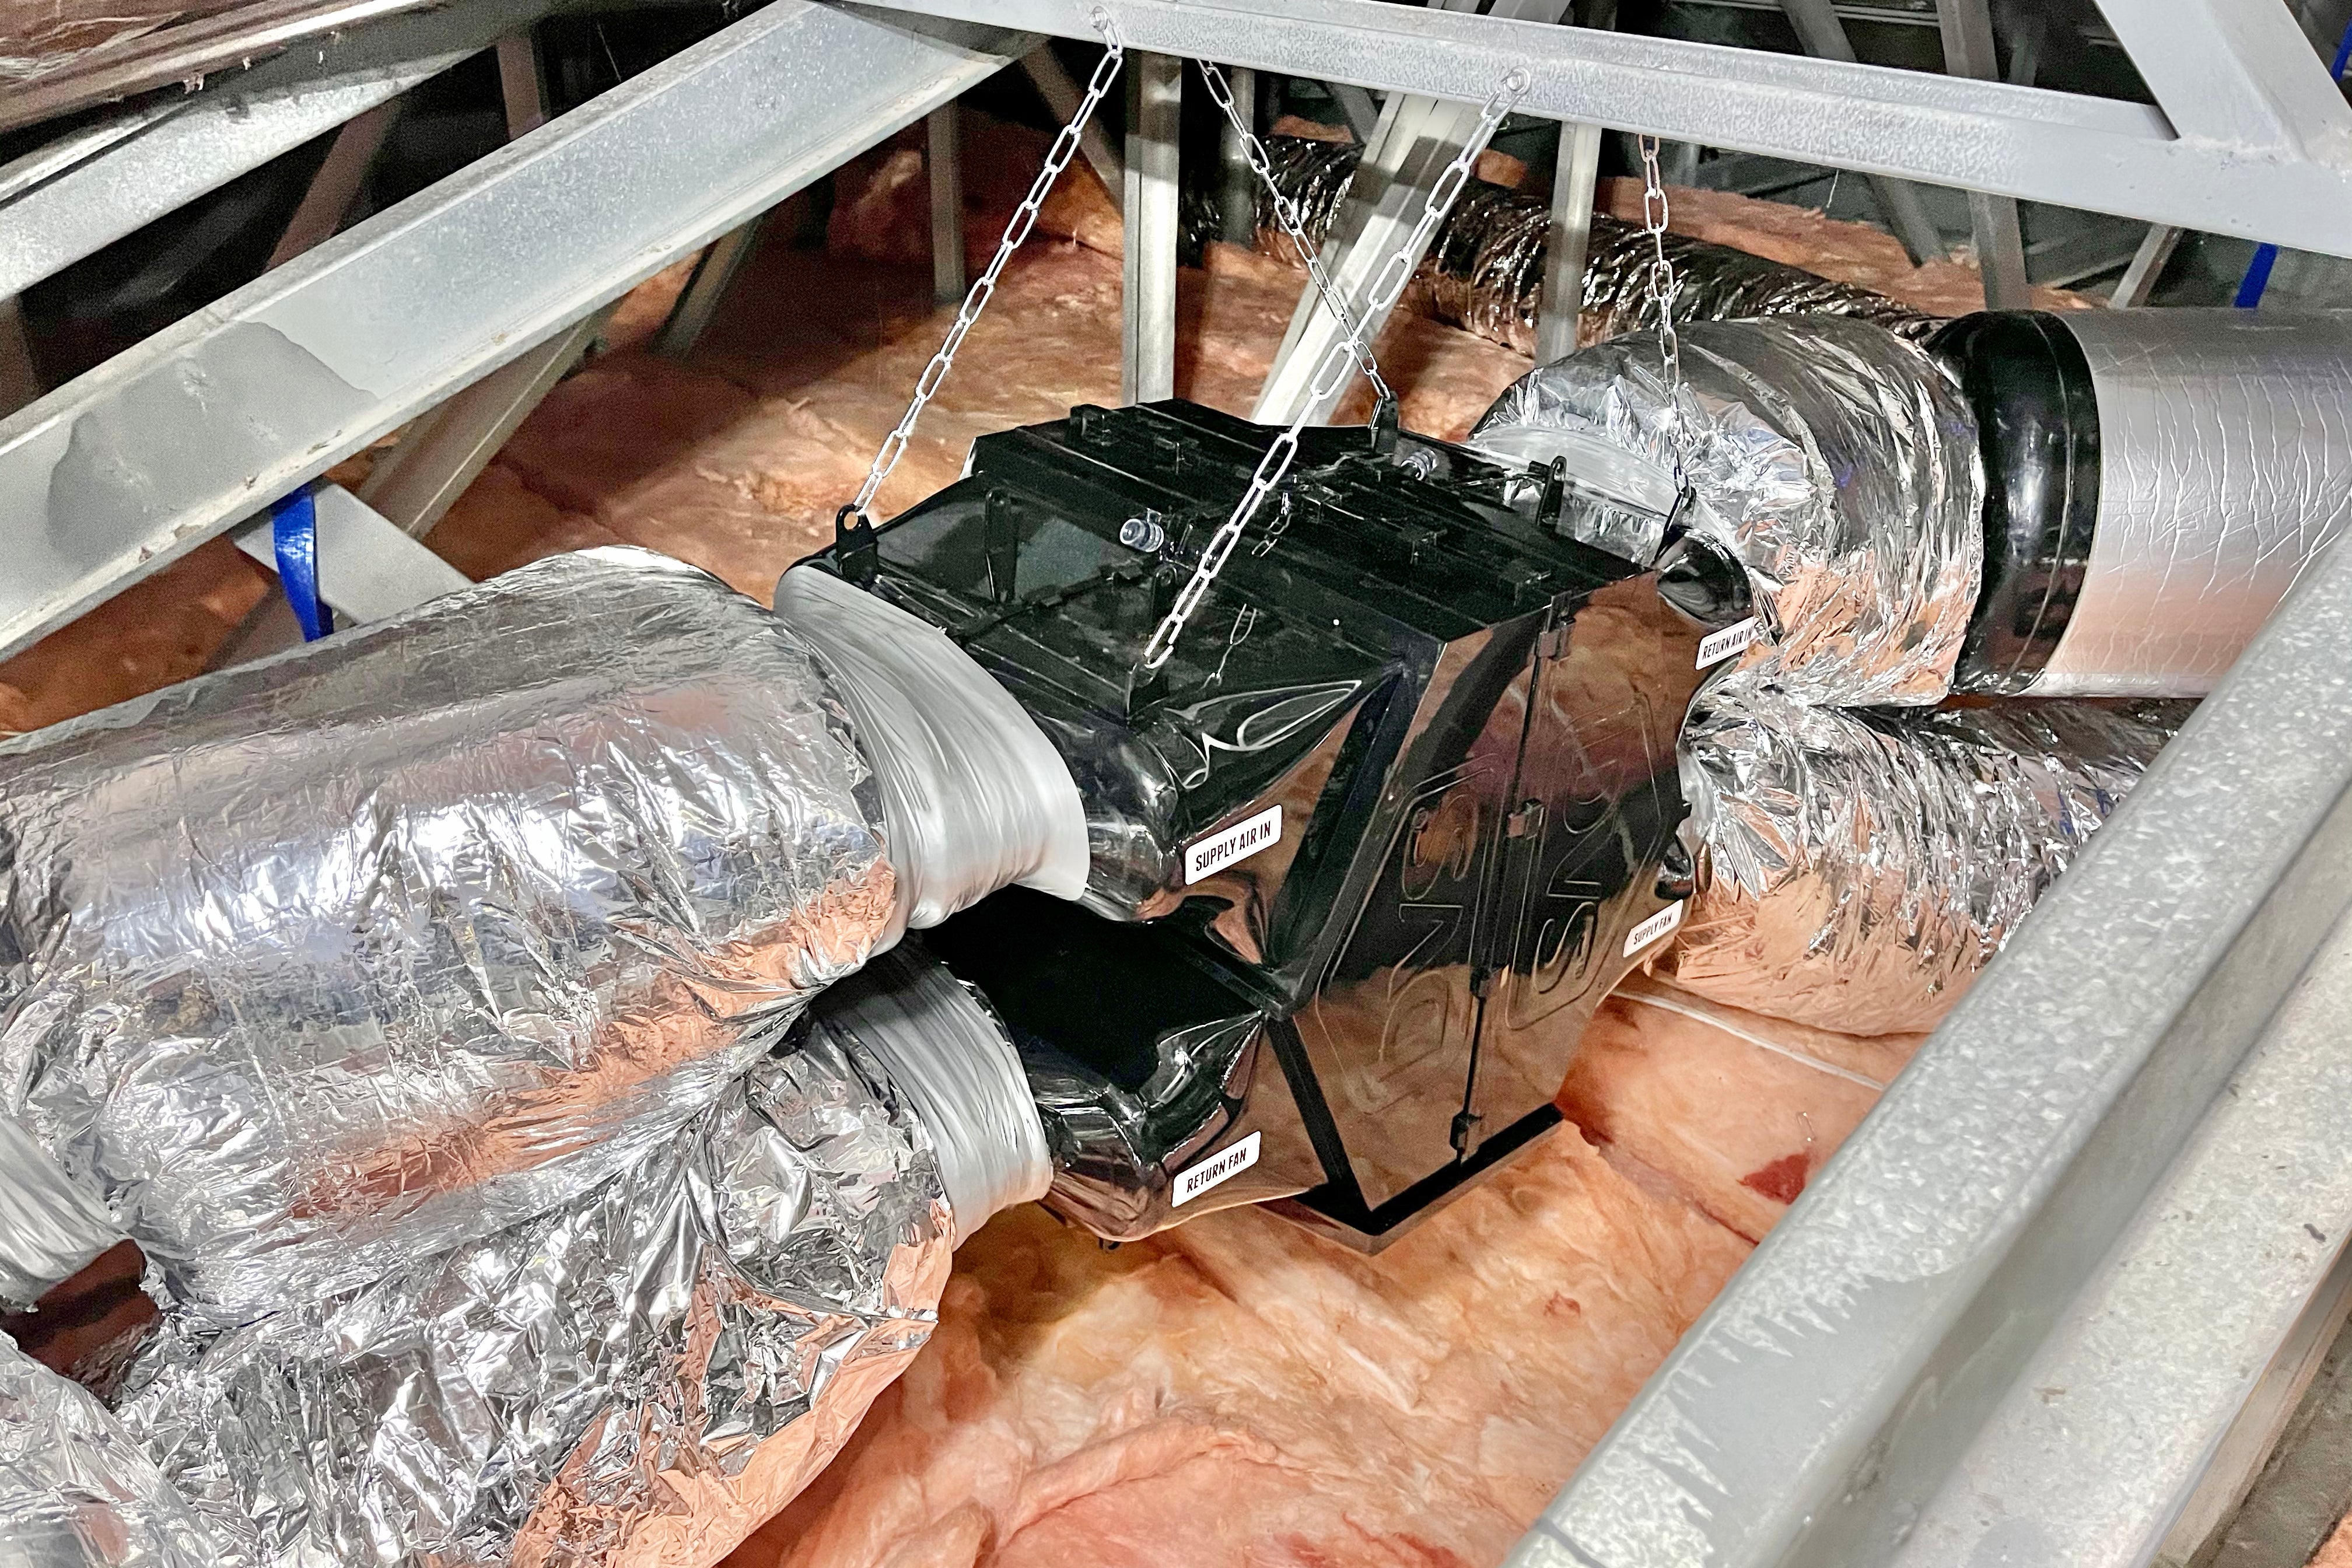 DVS EC Reclaim Connect Home Ventilation System